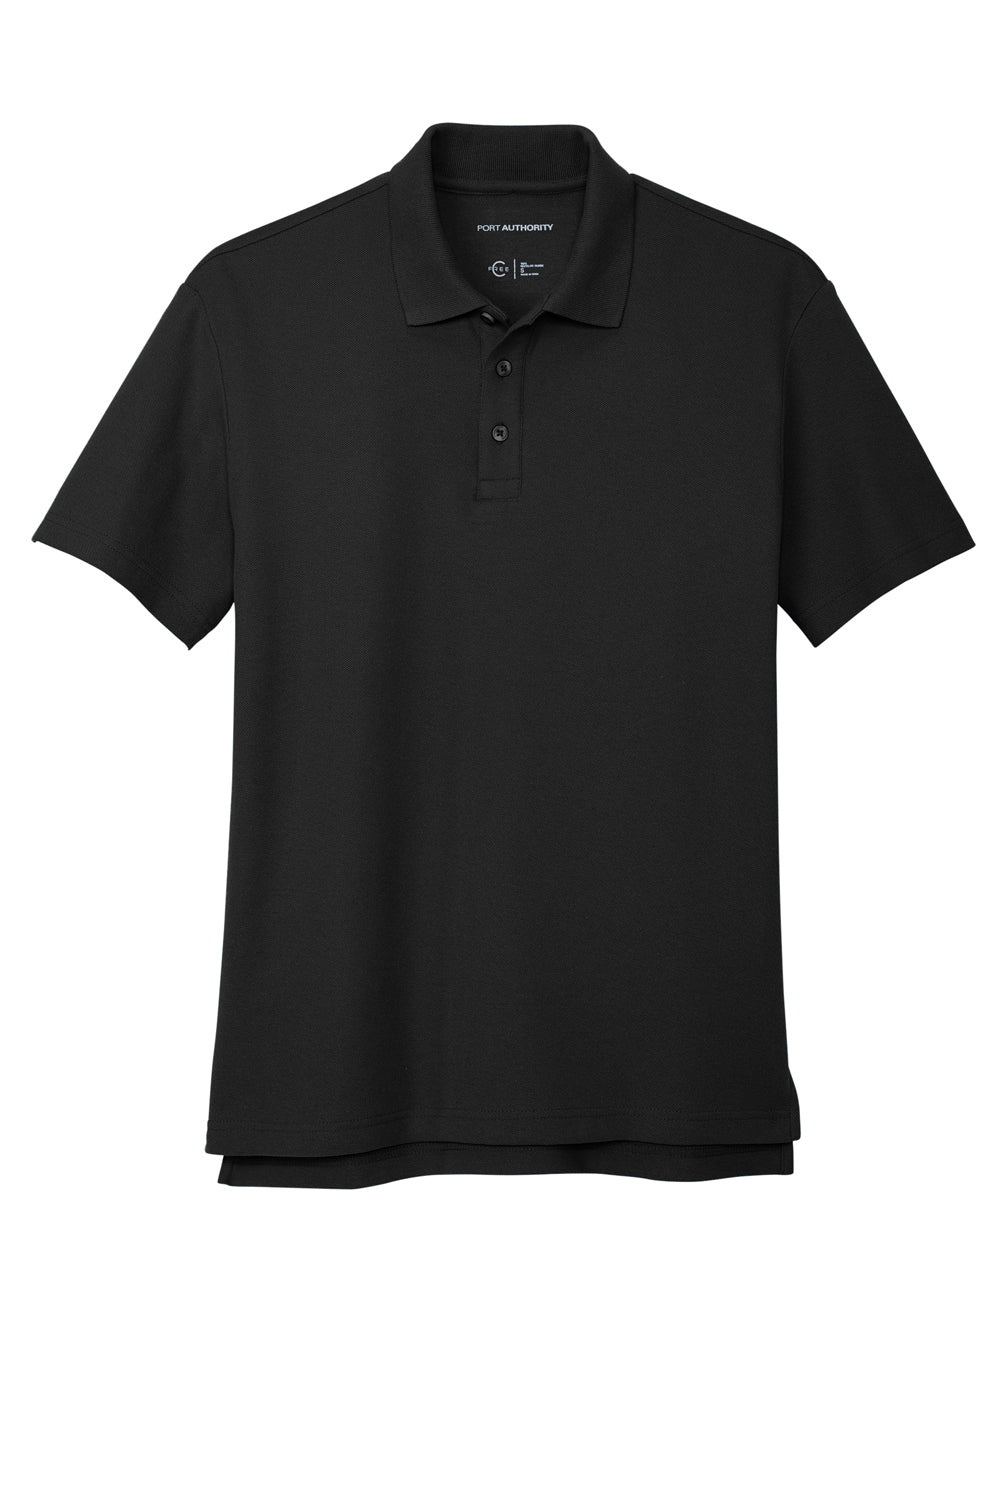 Port Authority K867 Mens C-FREE Pique Short Sleeve Polo Shirt Black Flat Front